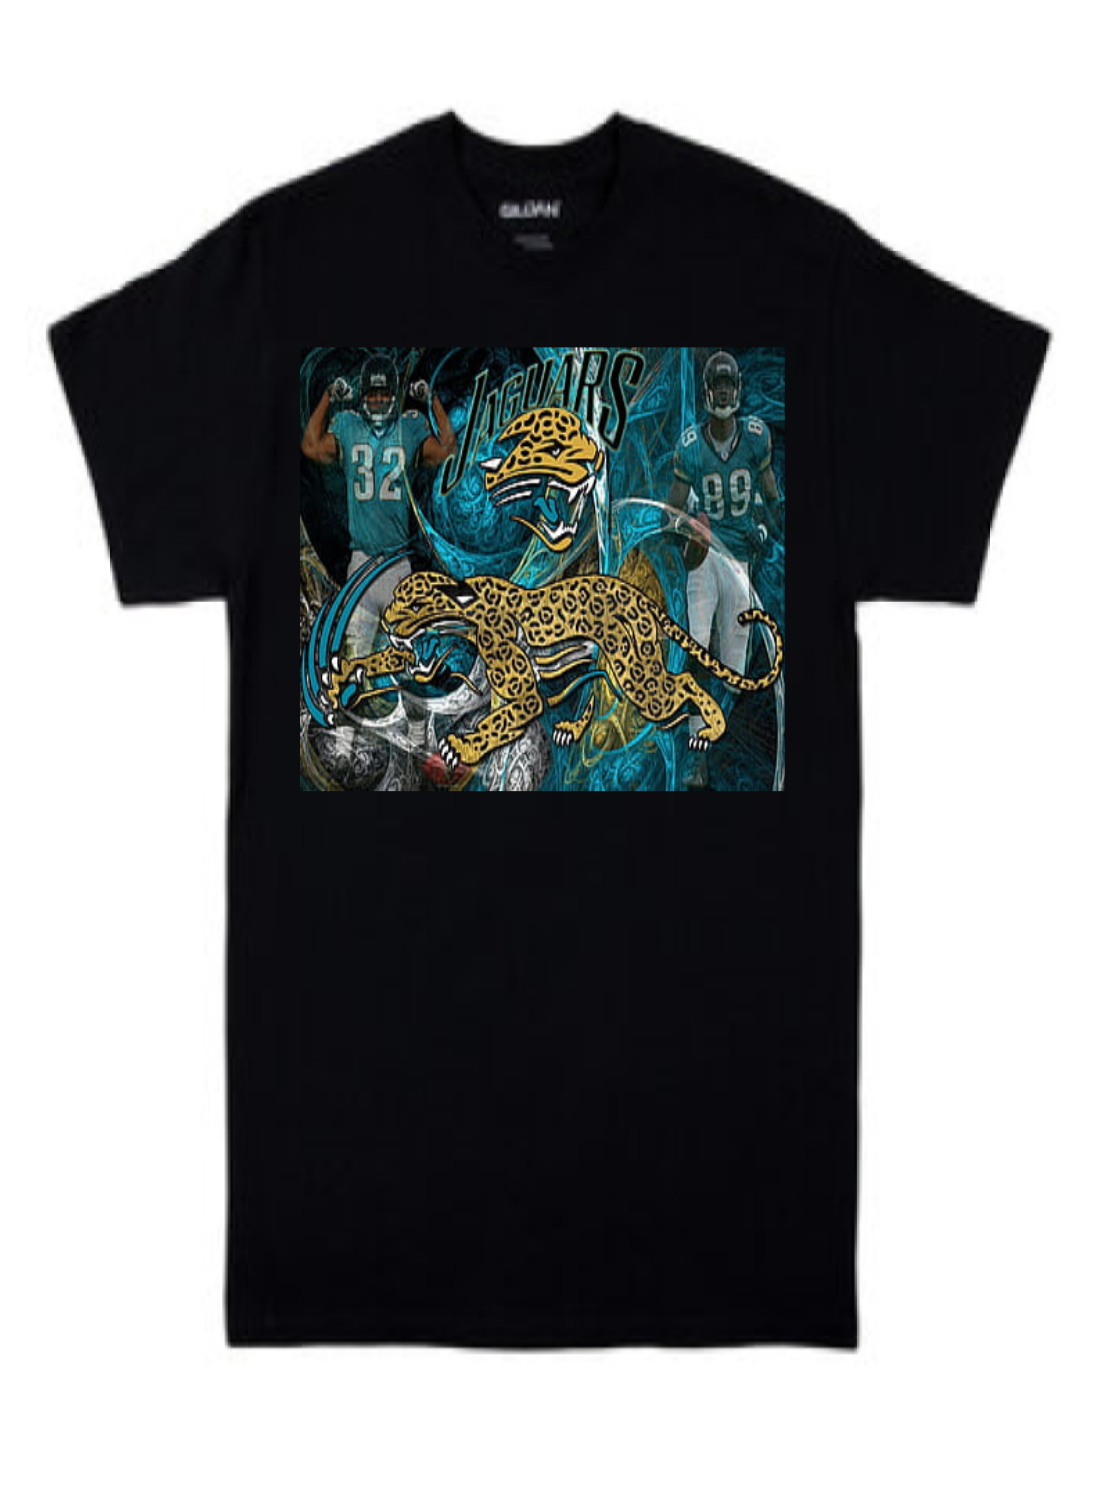 J. Jaguars Football Adult & Youth T-shirts